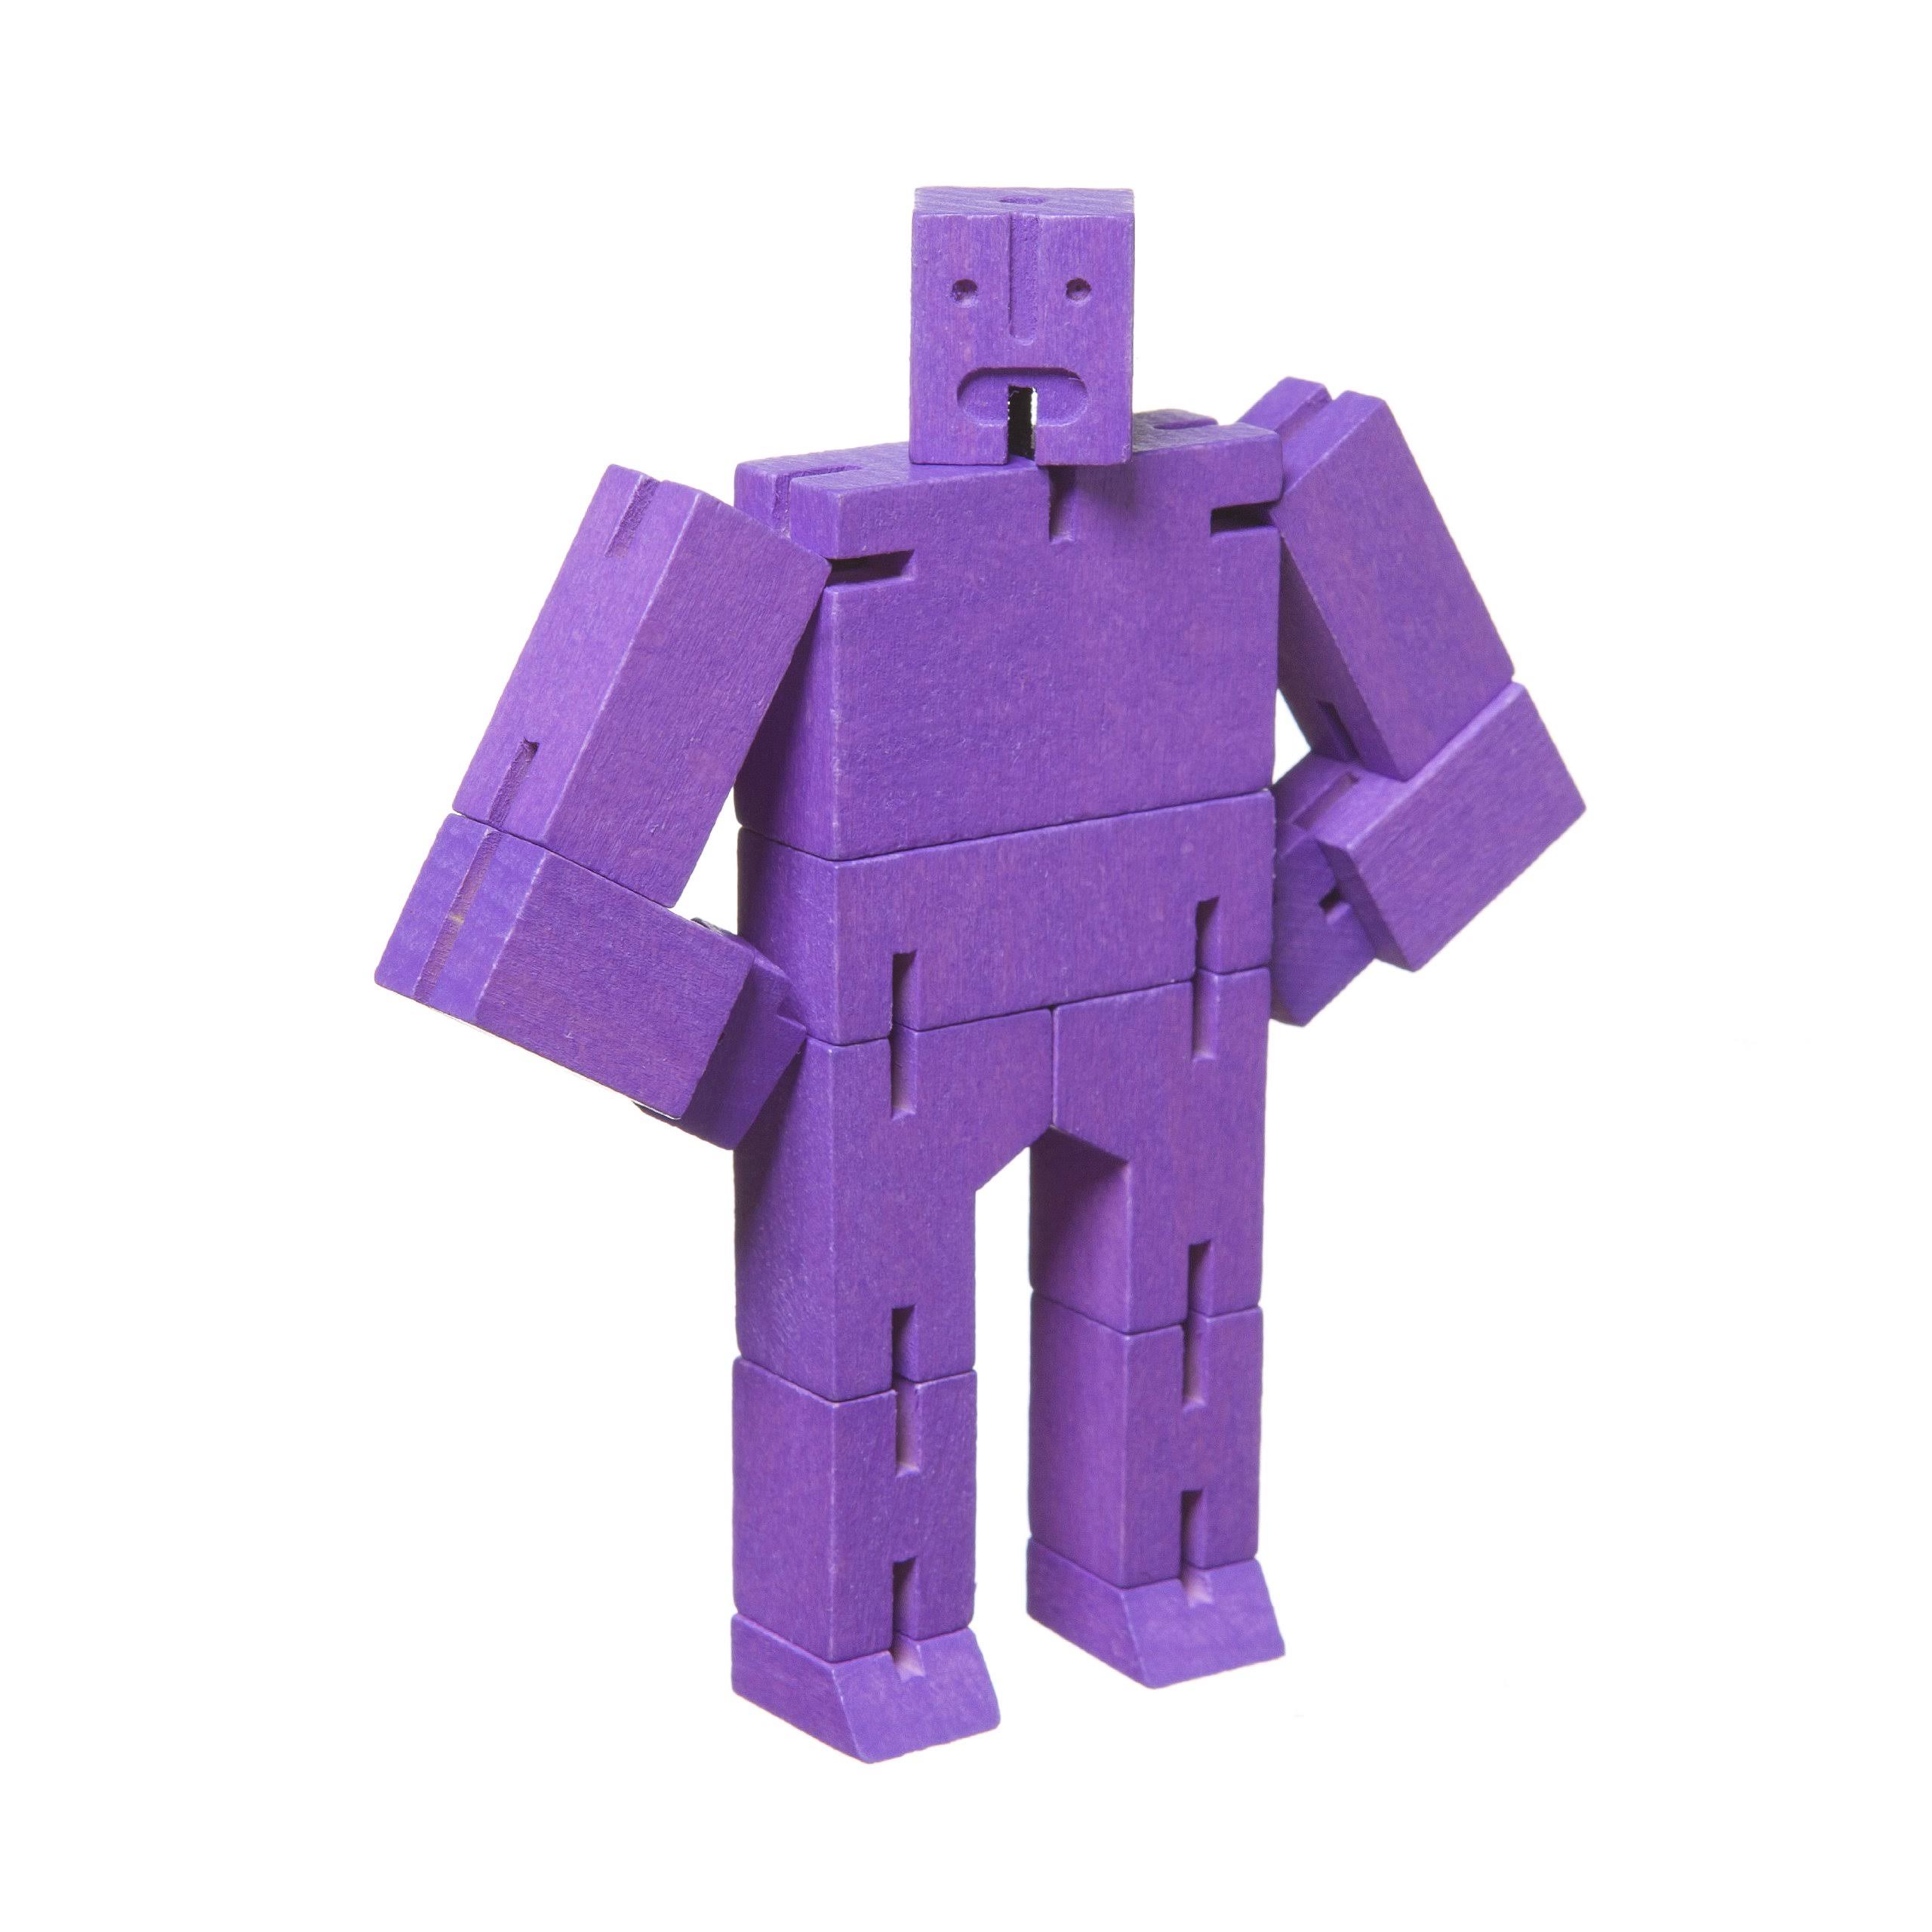 Areaware Micro Cubebot Brain Teaser Puzzle - Purple